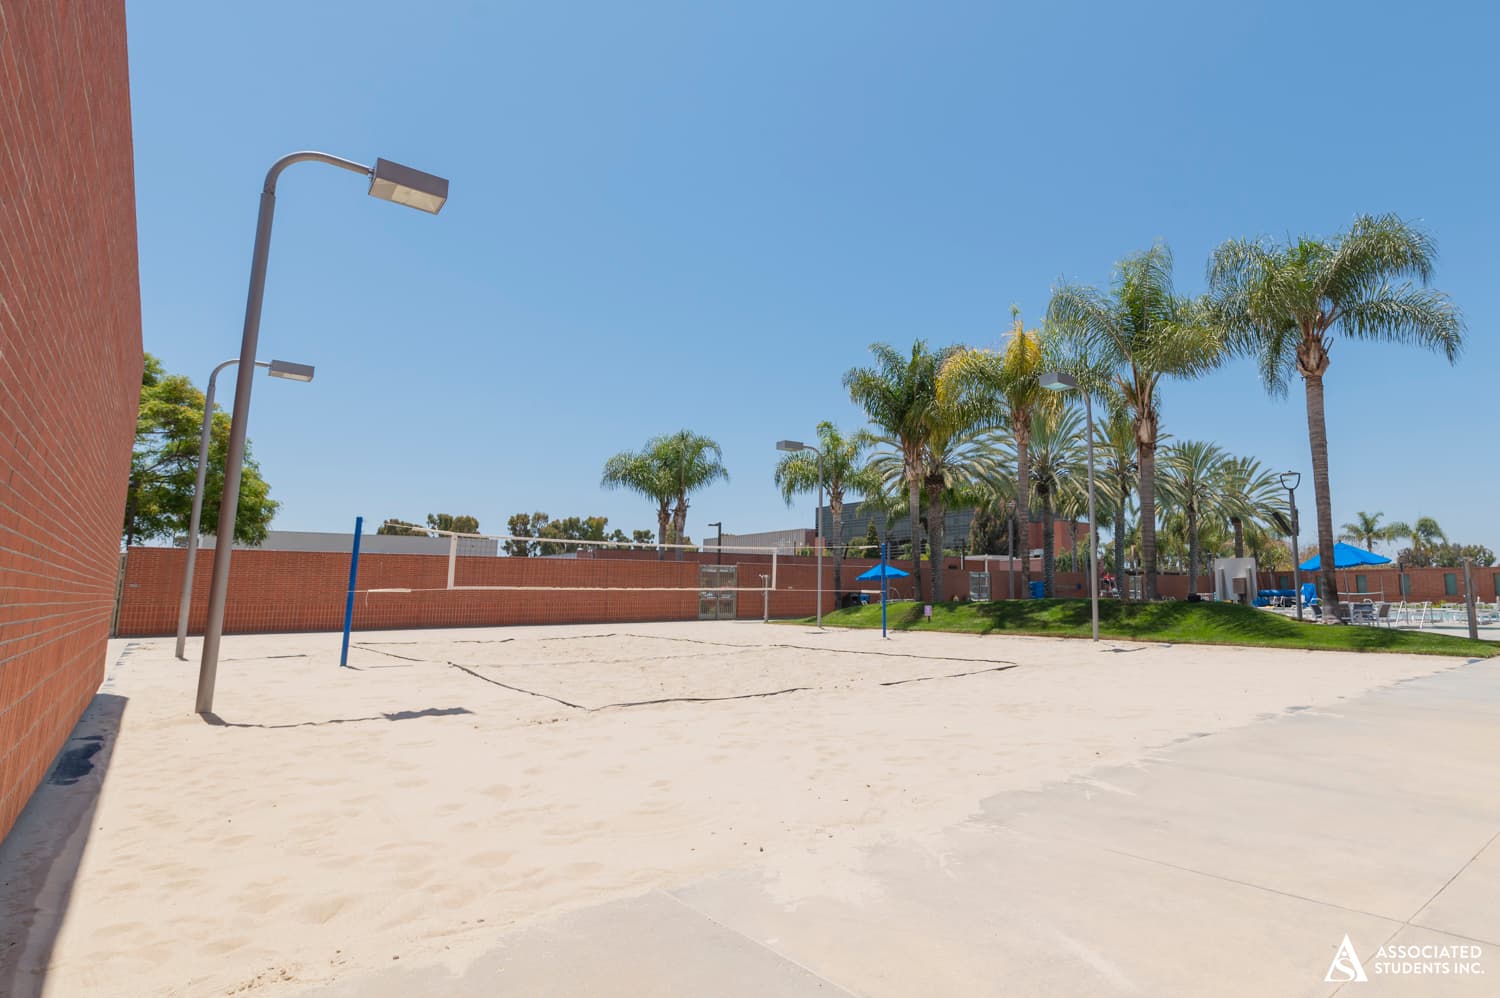 Sand Volleyball Court 1